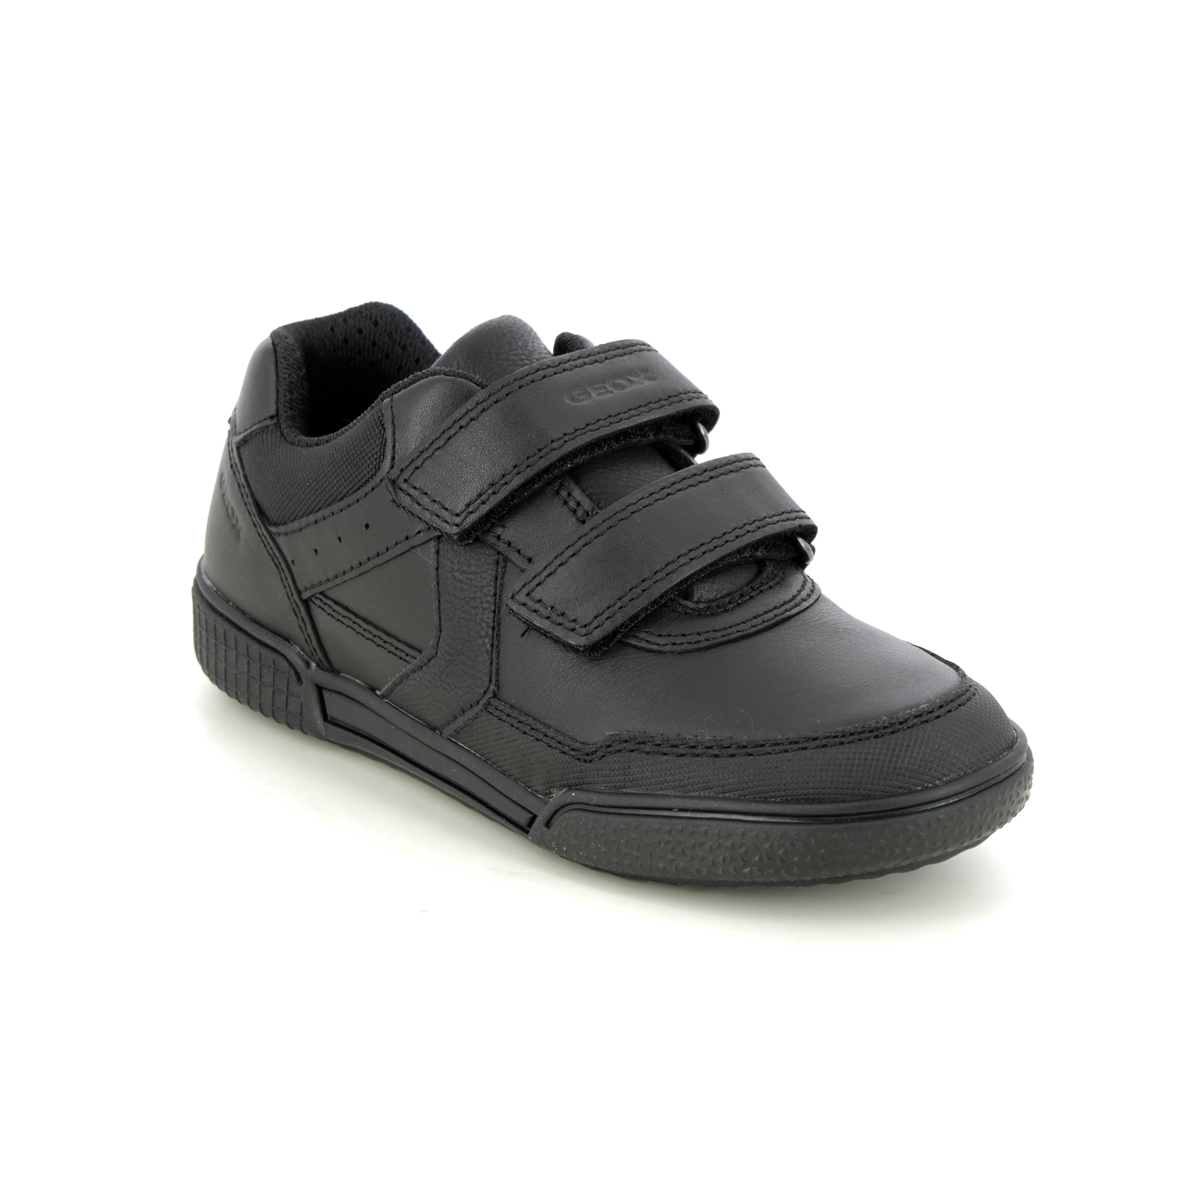 Geox - Poseido Boy 2V (Black Leather) J02Bca-C9999 In Size 35 In Plain Black Leather For School For kids